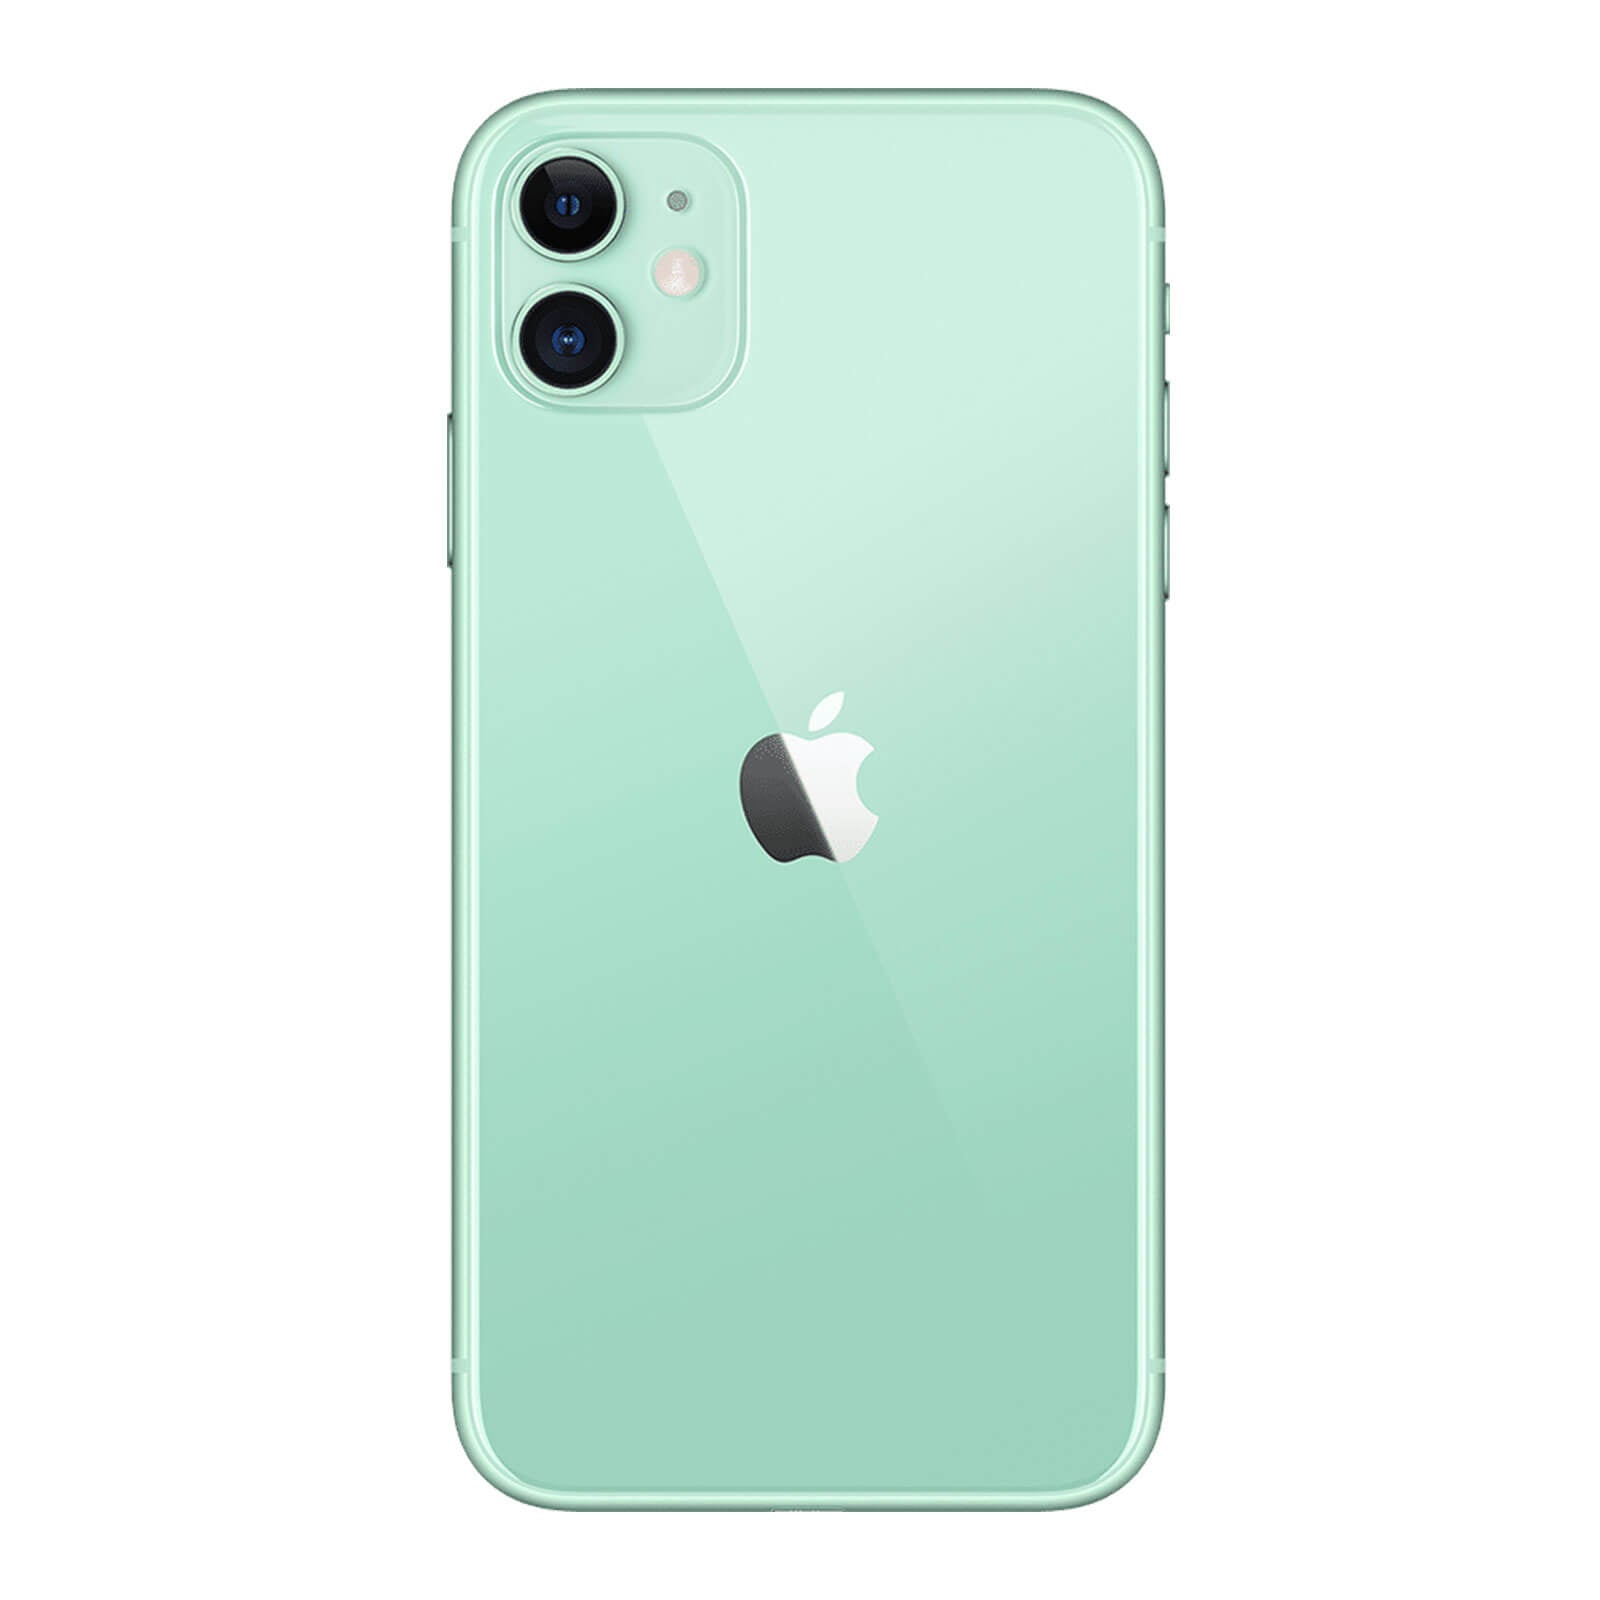 Apple iPhone 11 64GB Green Pristine - Unlocked